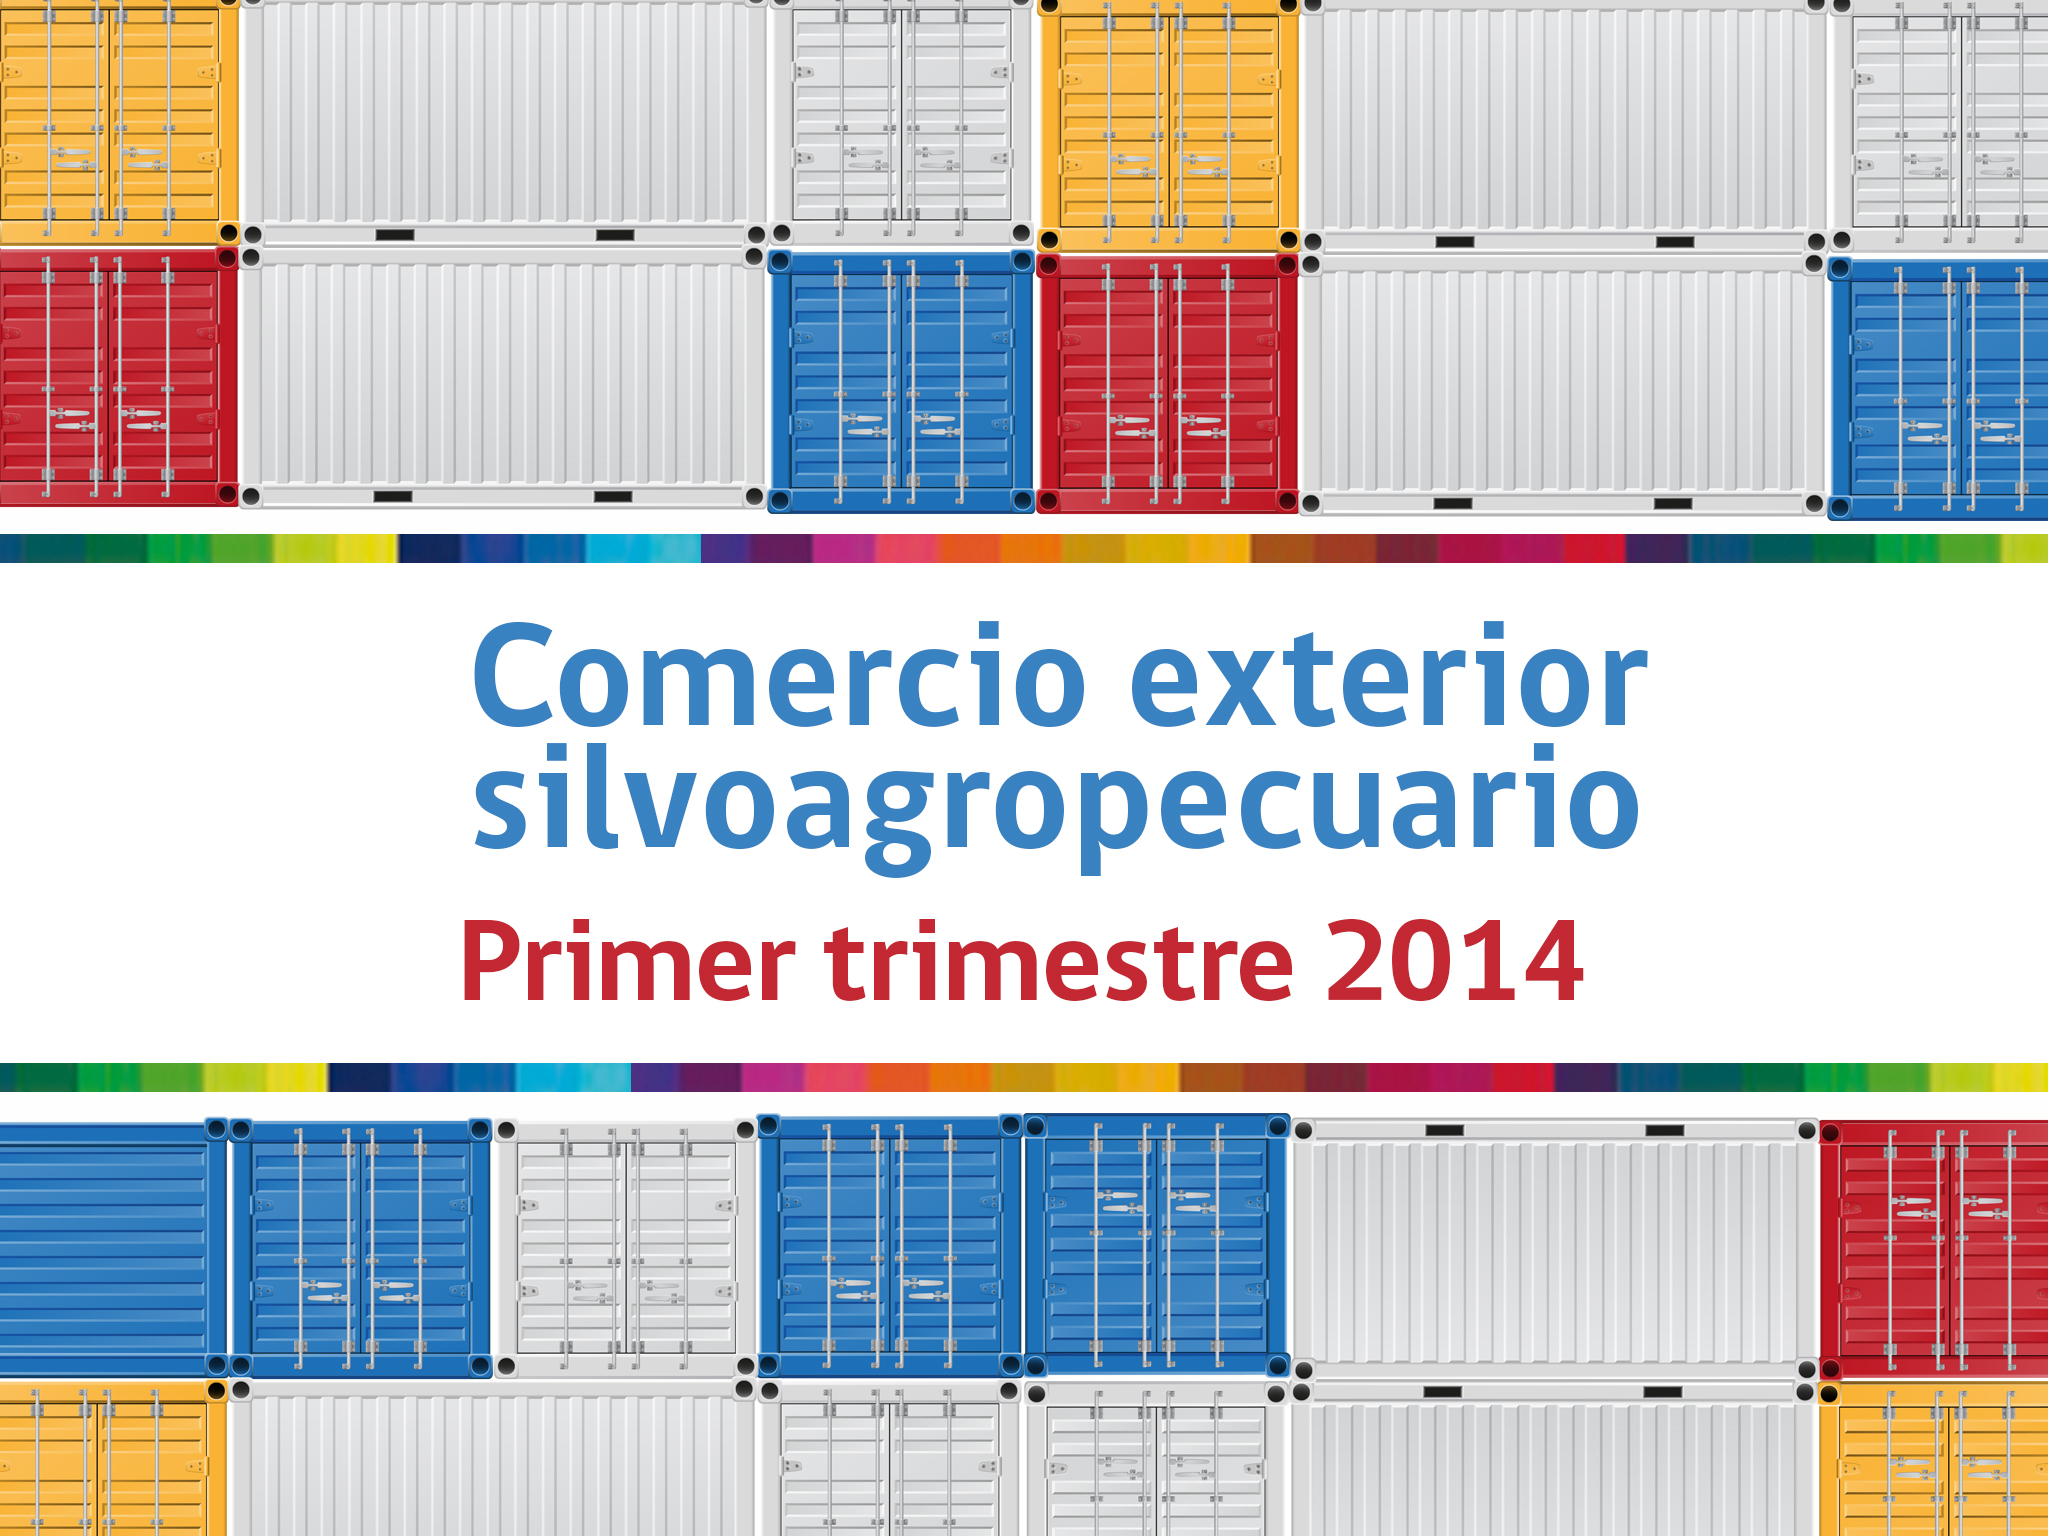 Datos de comercio exterior del primer trimestre de 2014